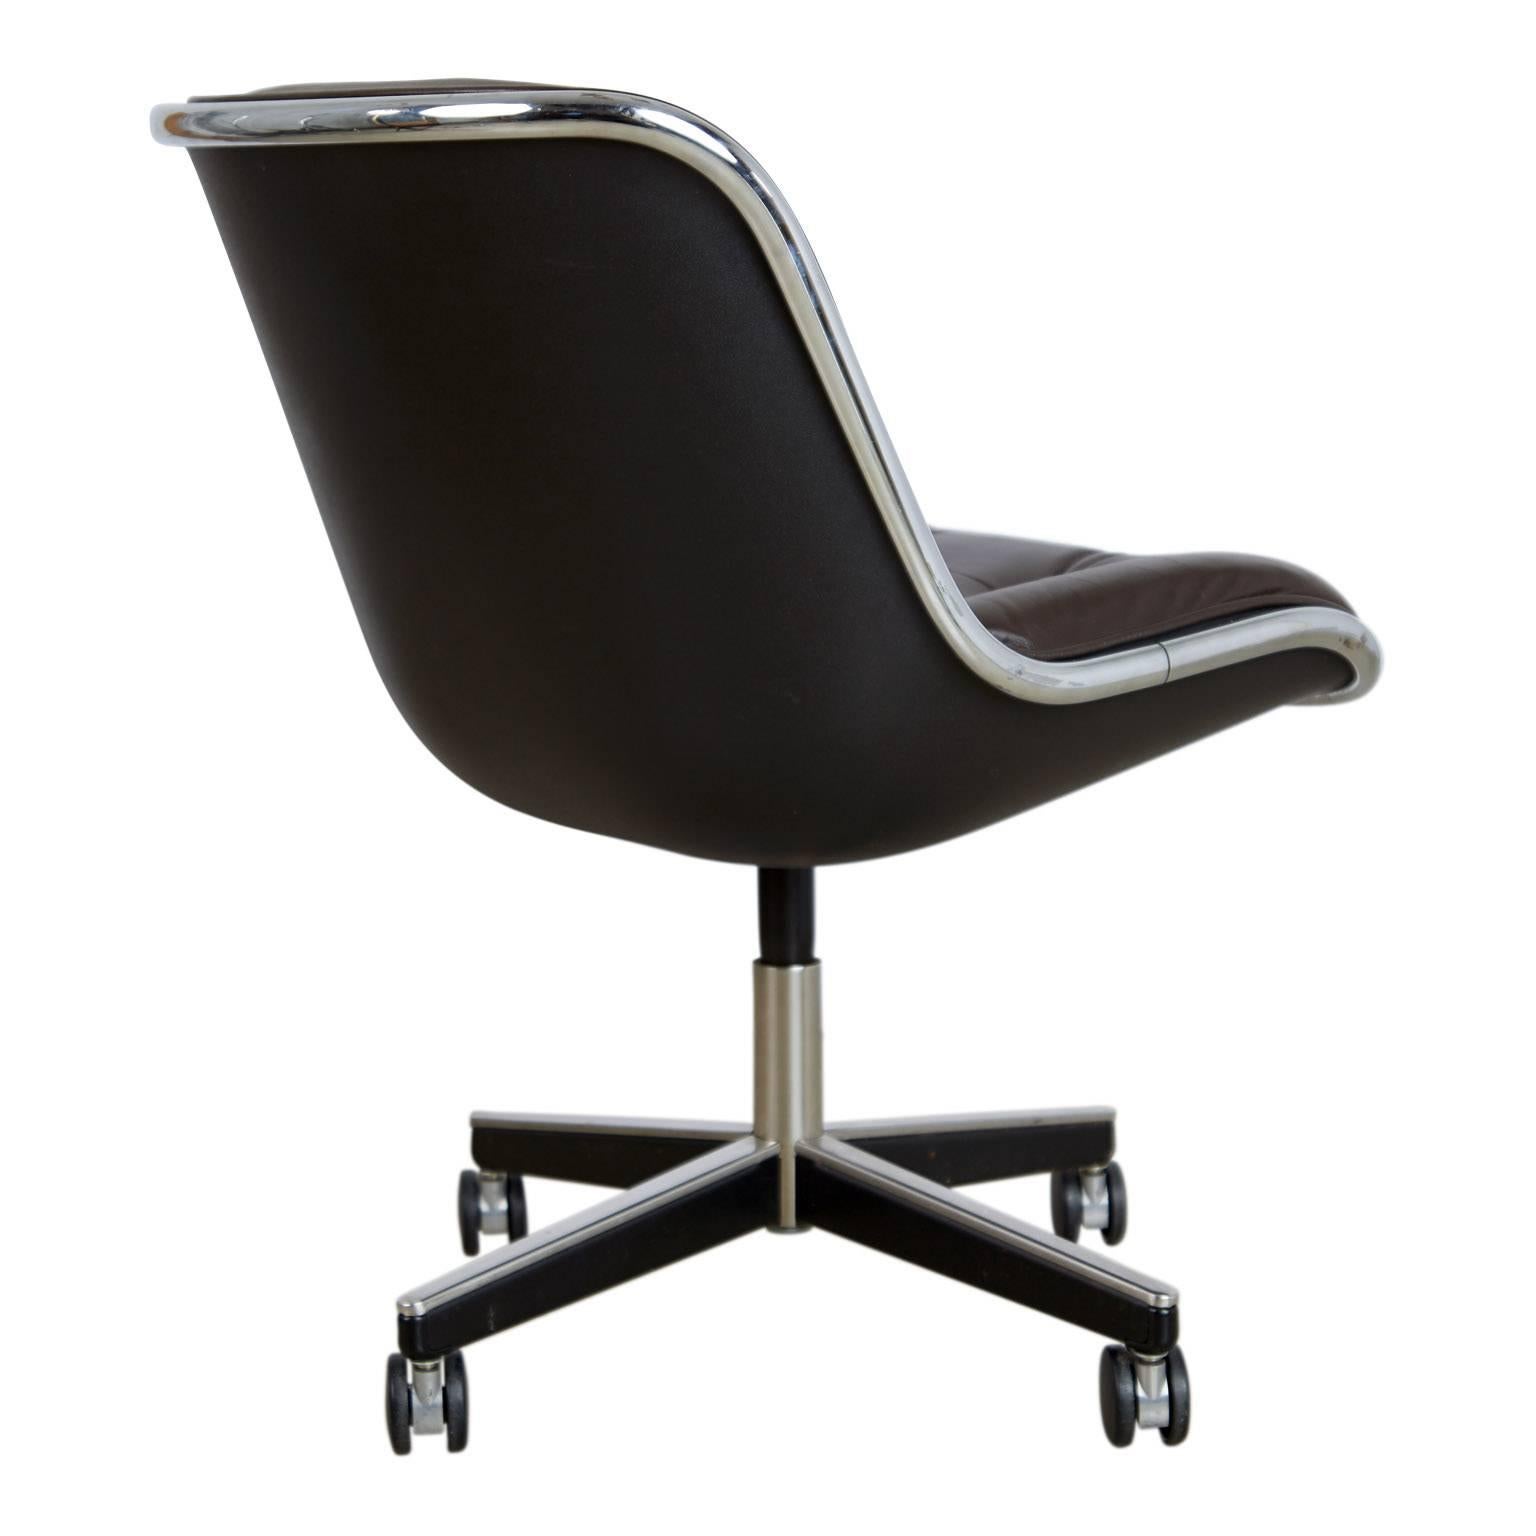 Mid-Century Modern Charles Pollock for Knoll Dark Brown Leather Executive Desk Chair, circa 1980